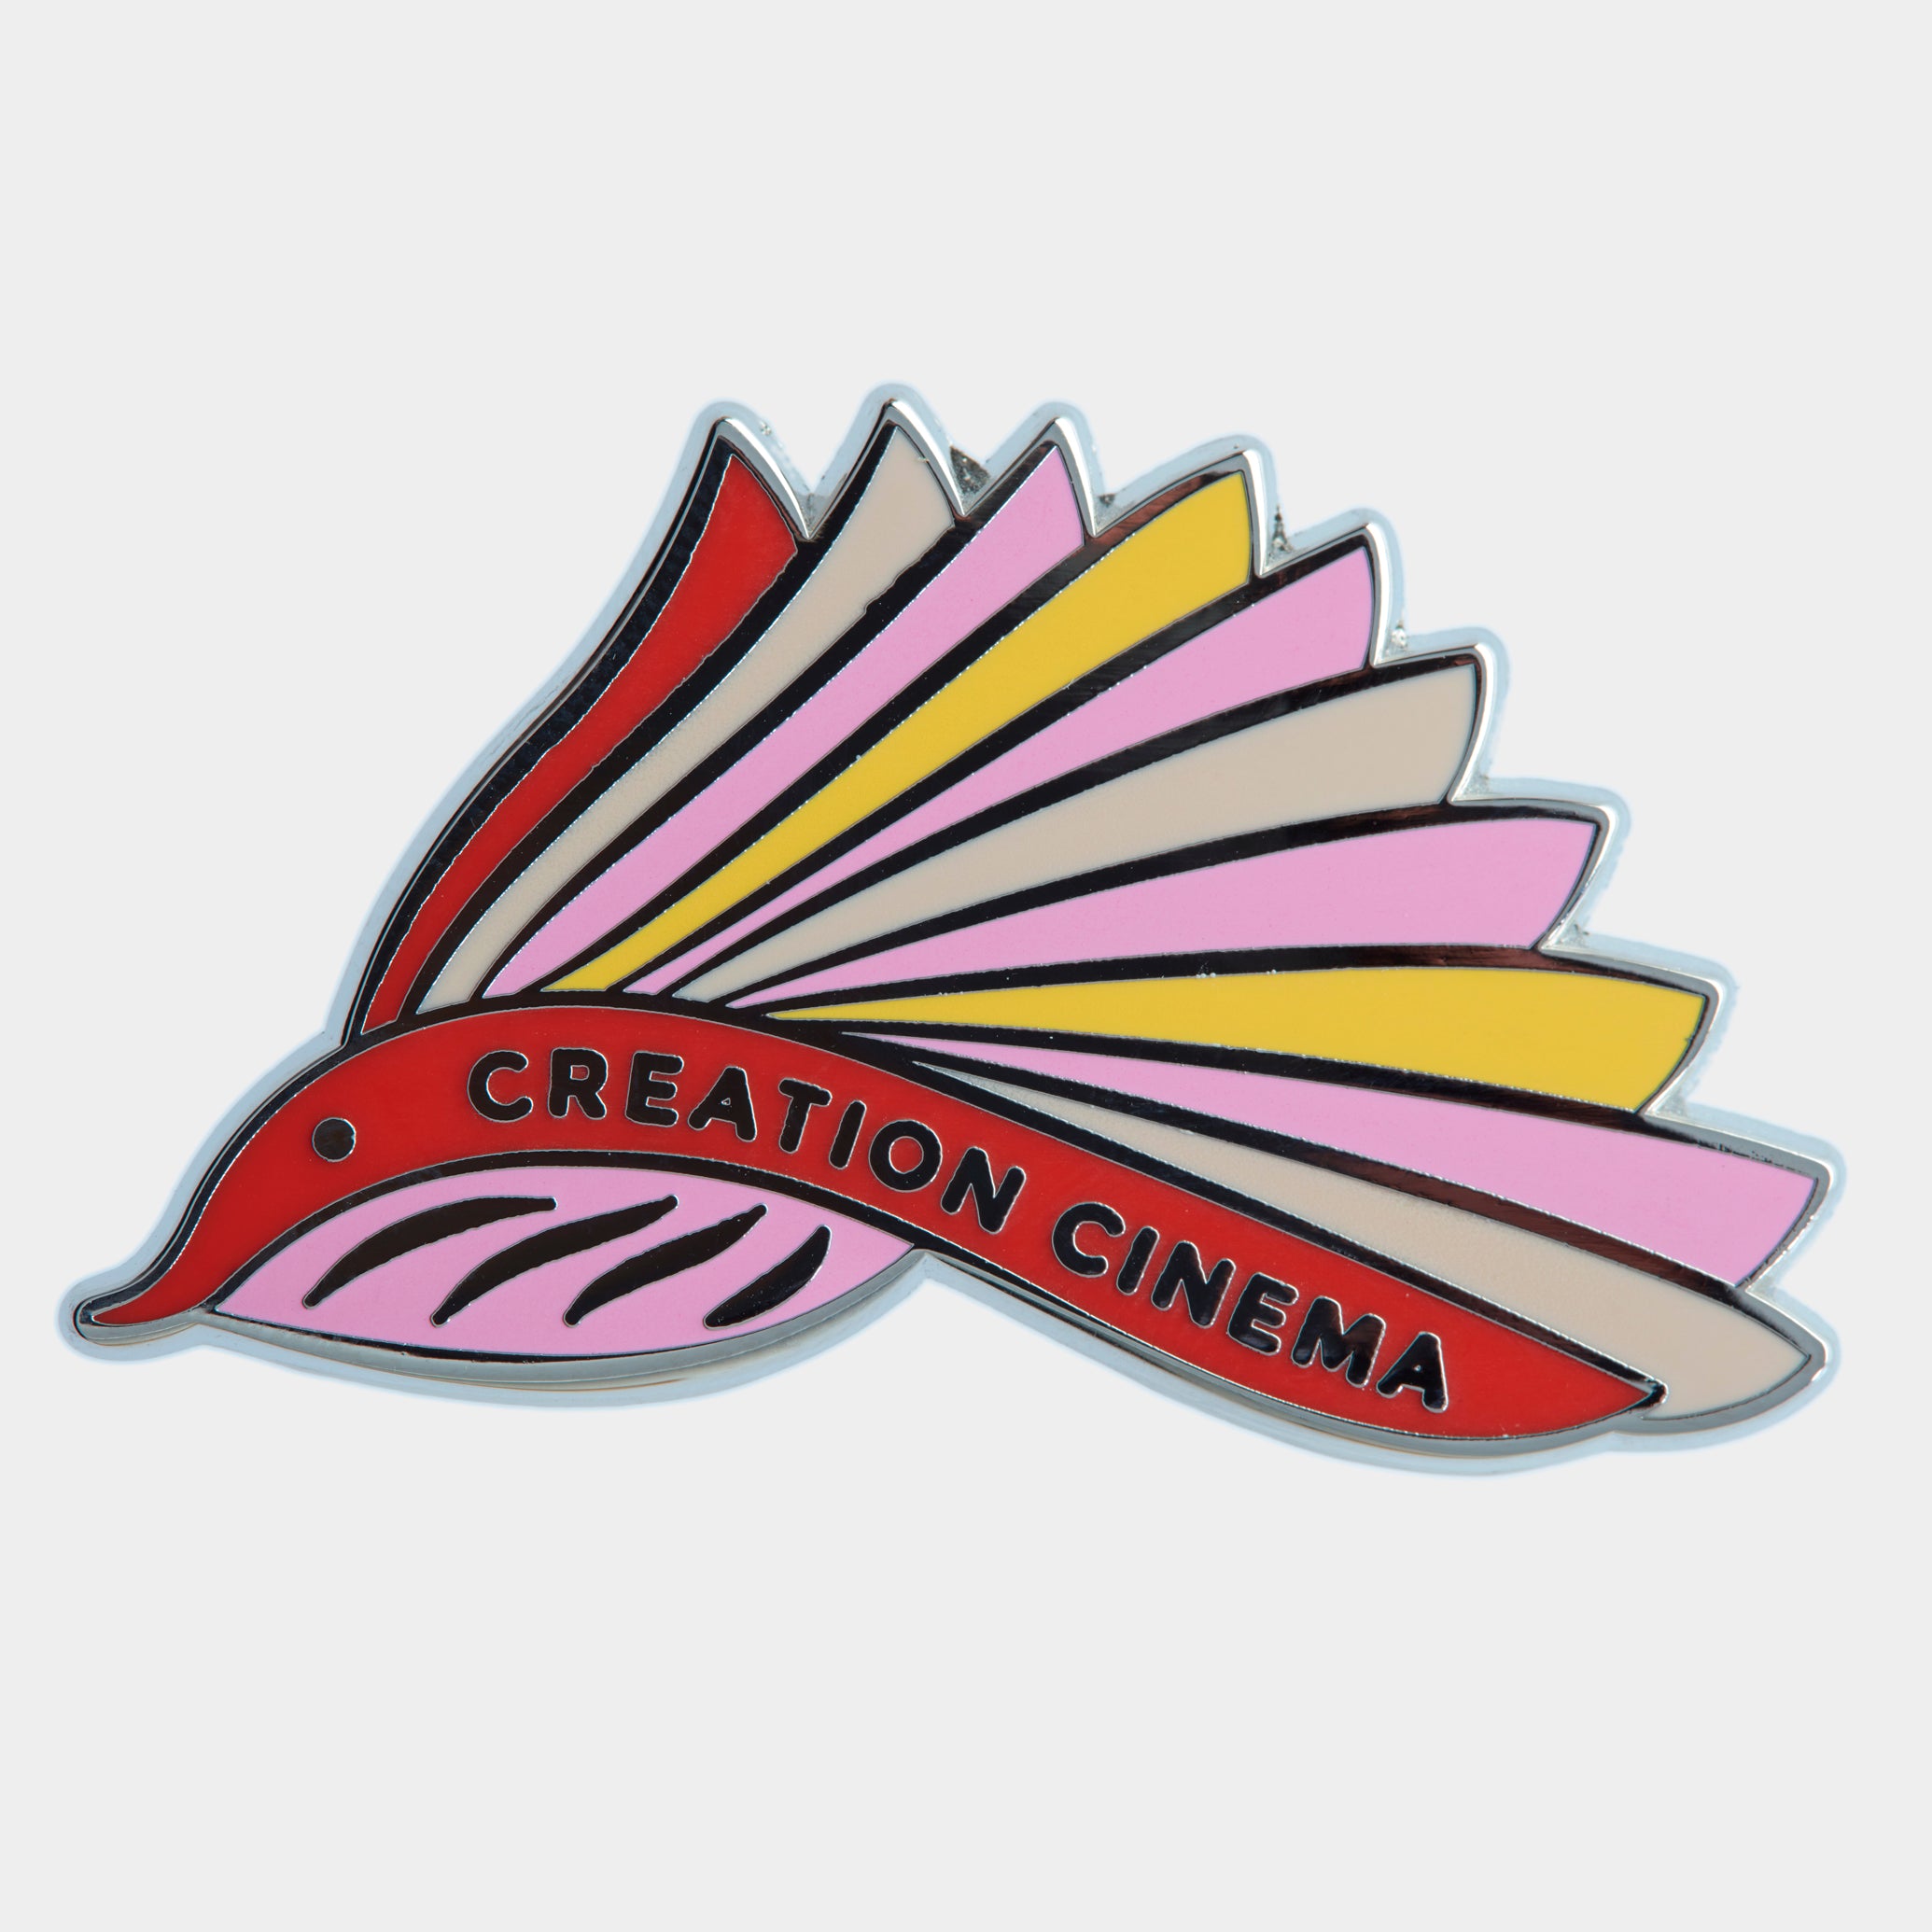 Creation Cinema Enamel Pin